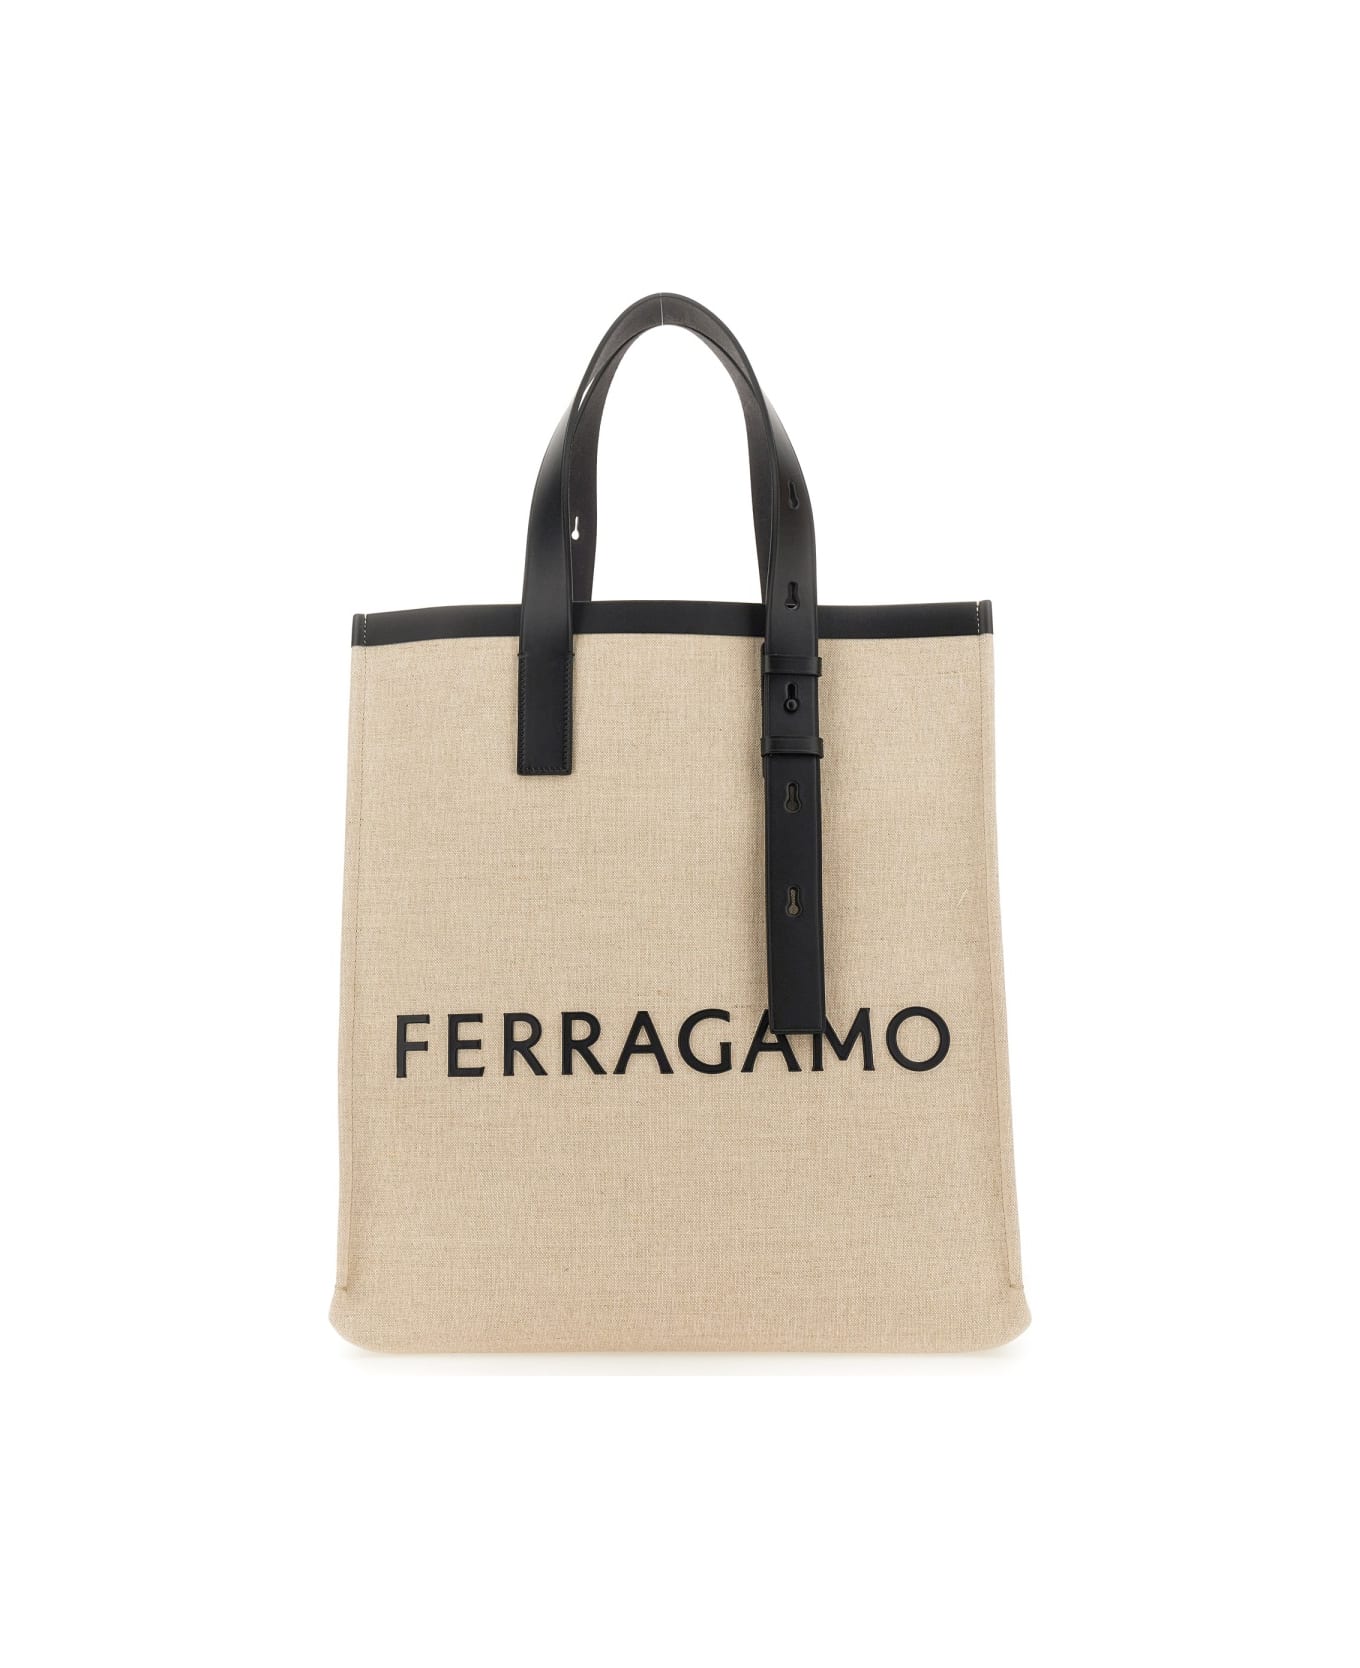 Ferragamo Tote Bag With Logo - BEIGE